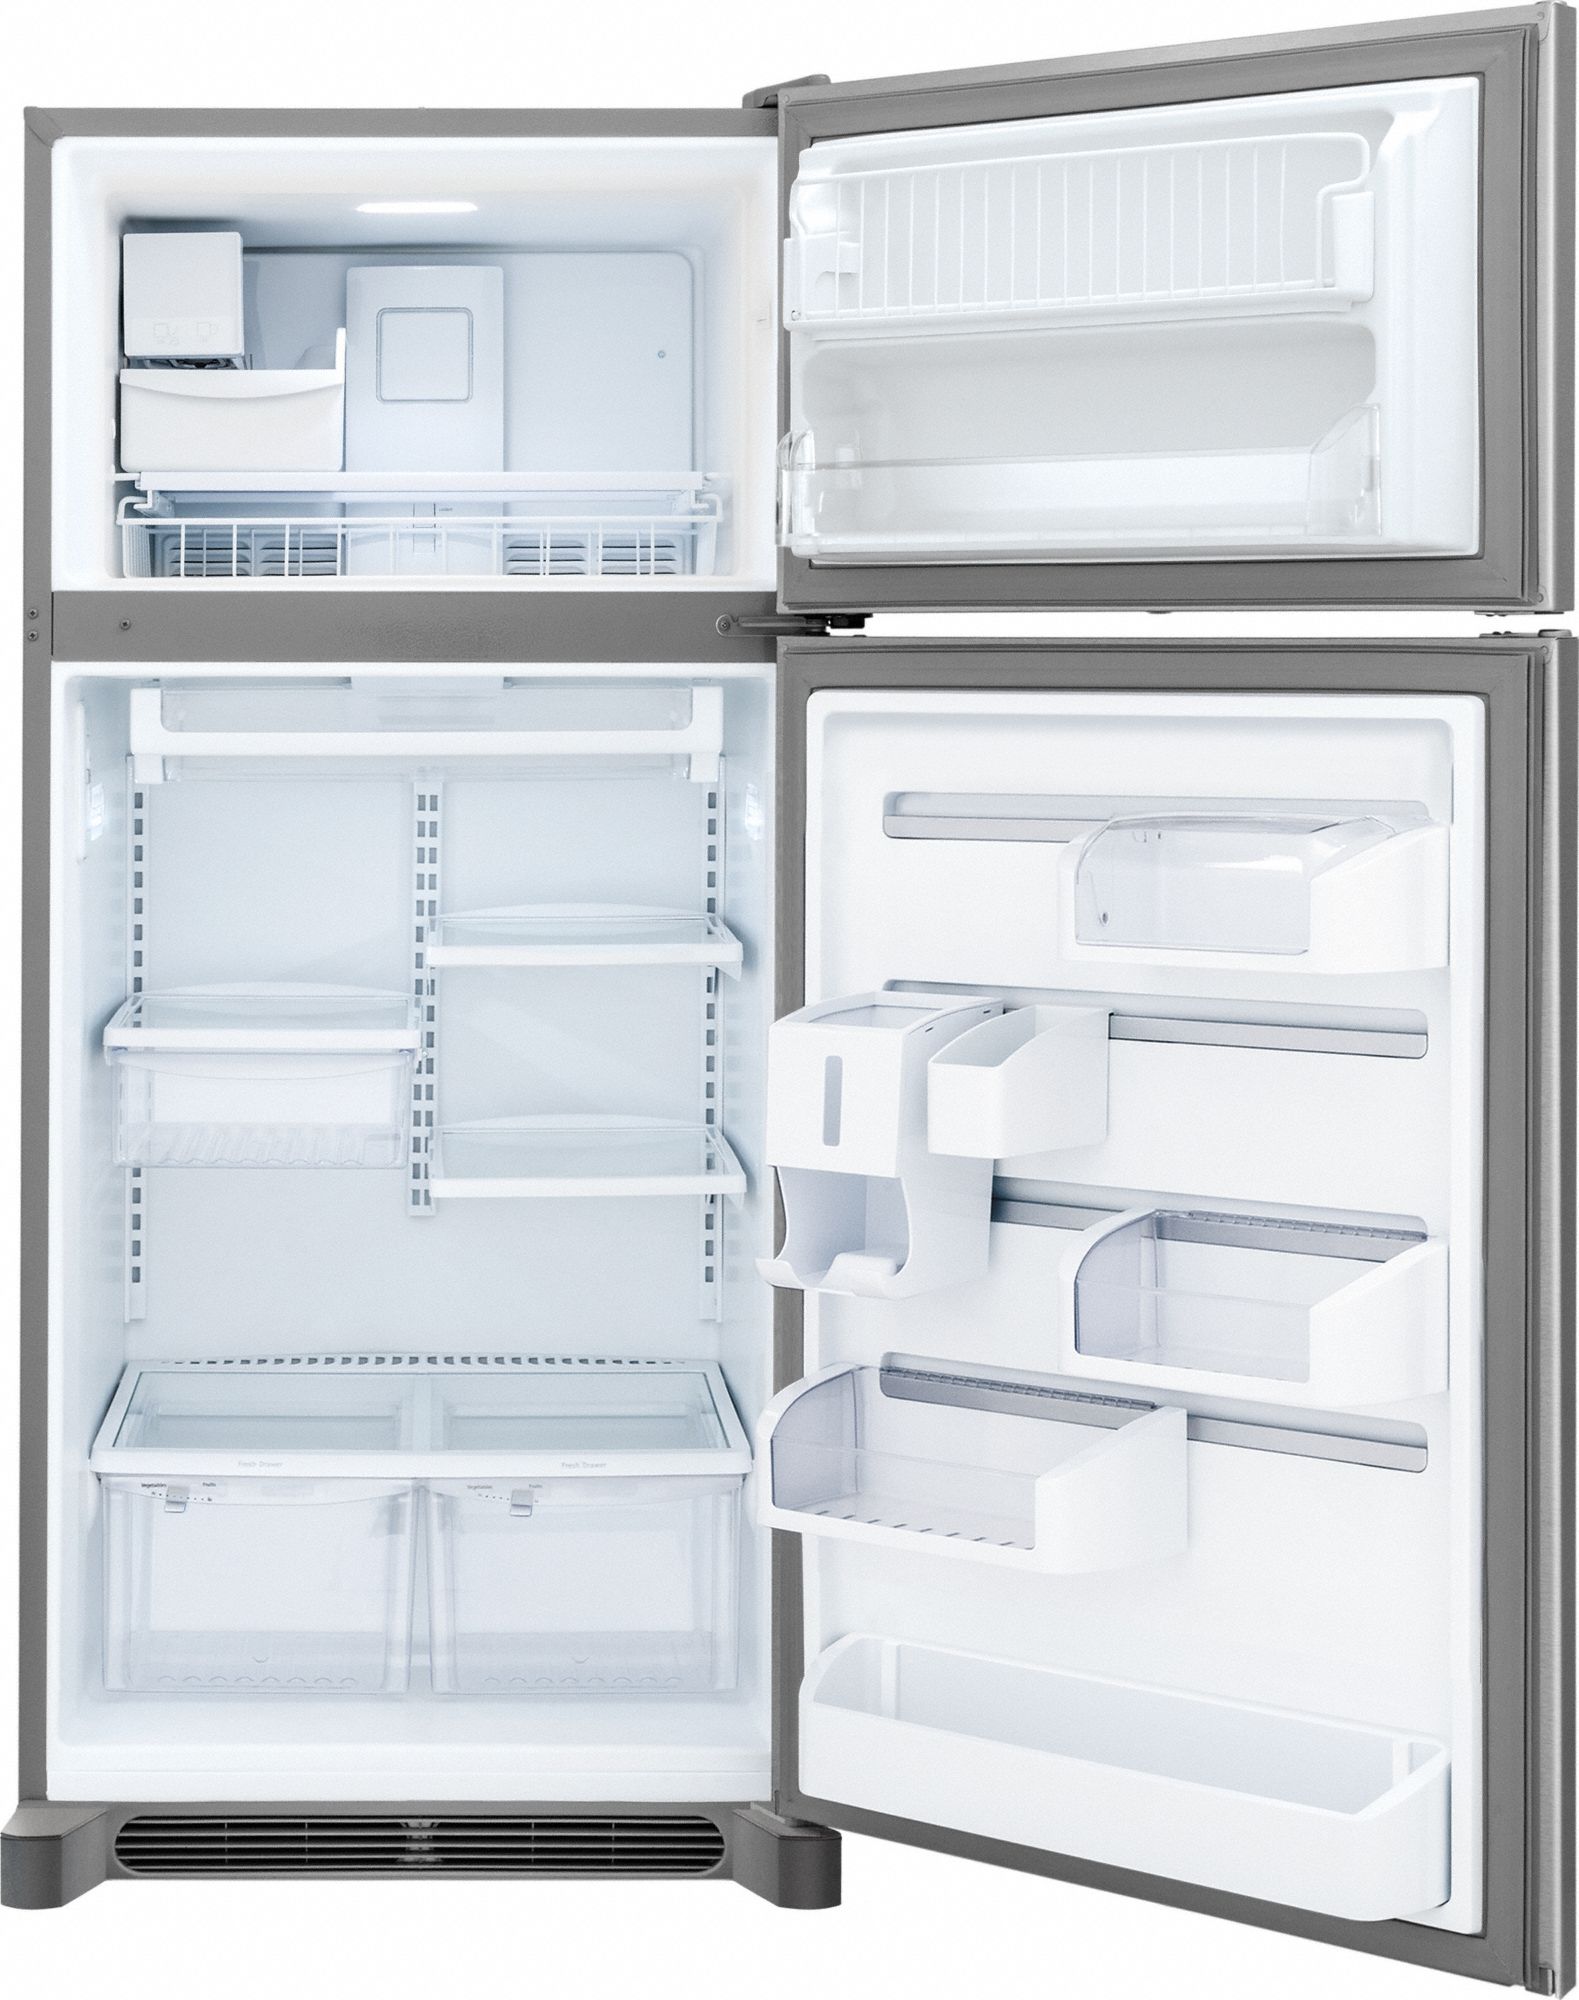 FRIGIDAIRE Refrigerator, Residential, Stainless Steel, 30